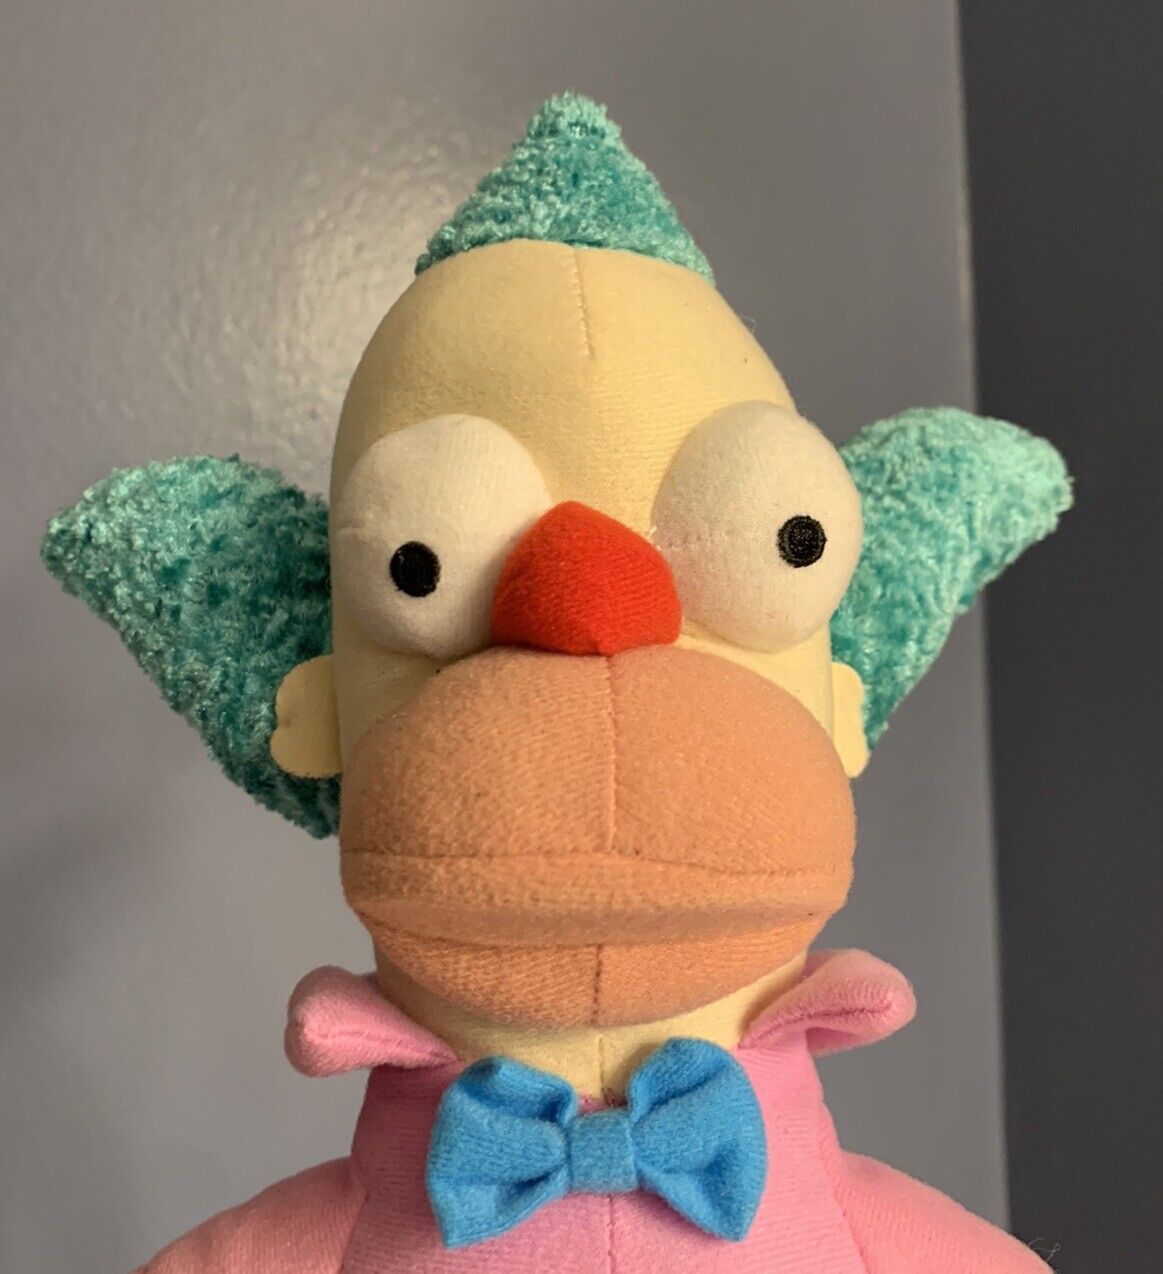 The Simpsons Krusty the Clown Stuffed Toy Plush 15”